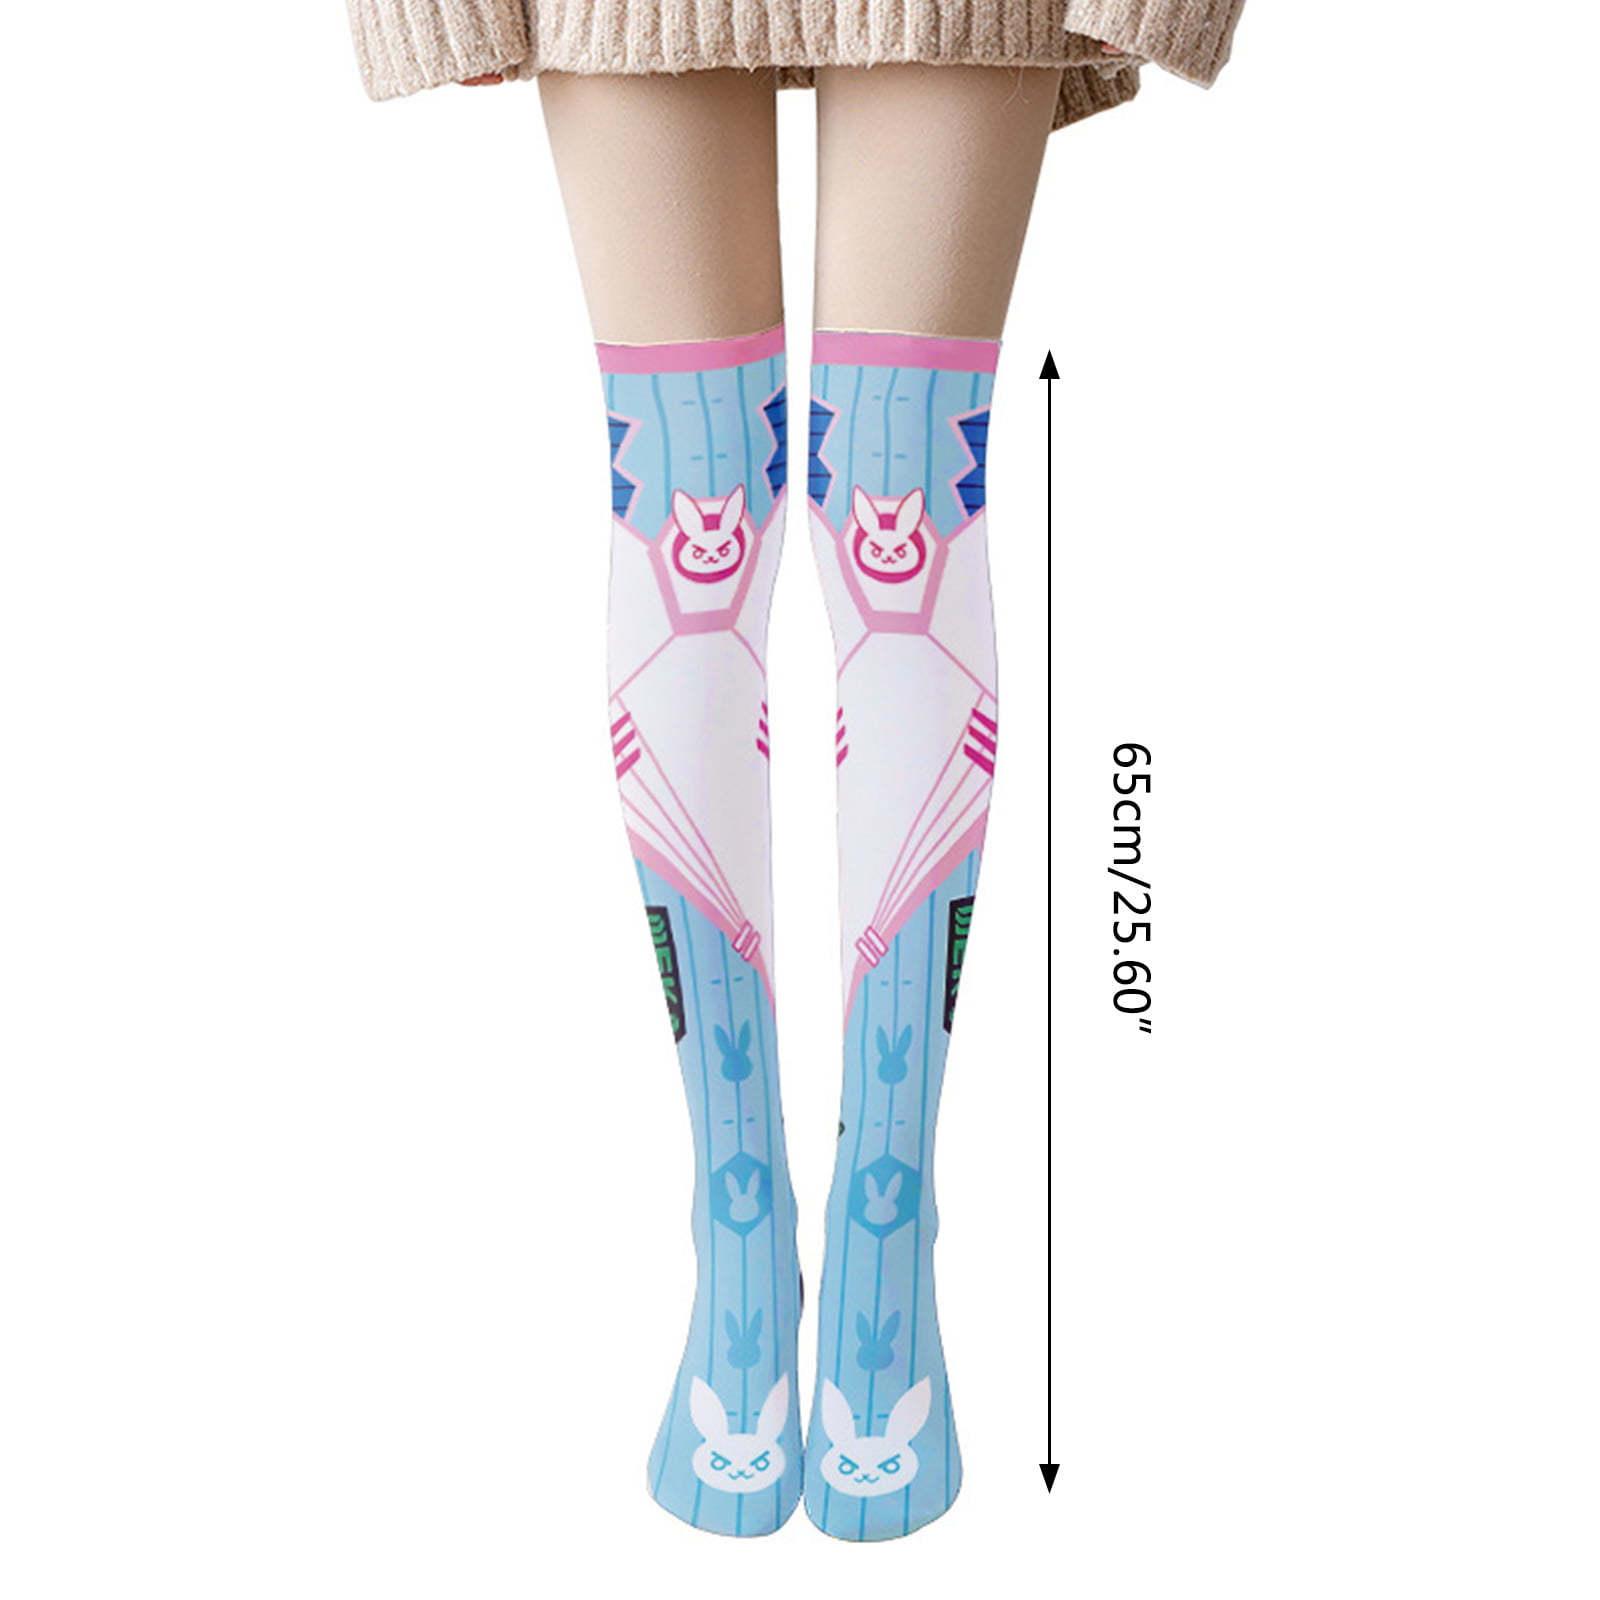 GENEMA Japanese Anime Lolita Thigh High Stockings Women